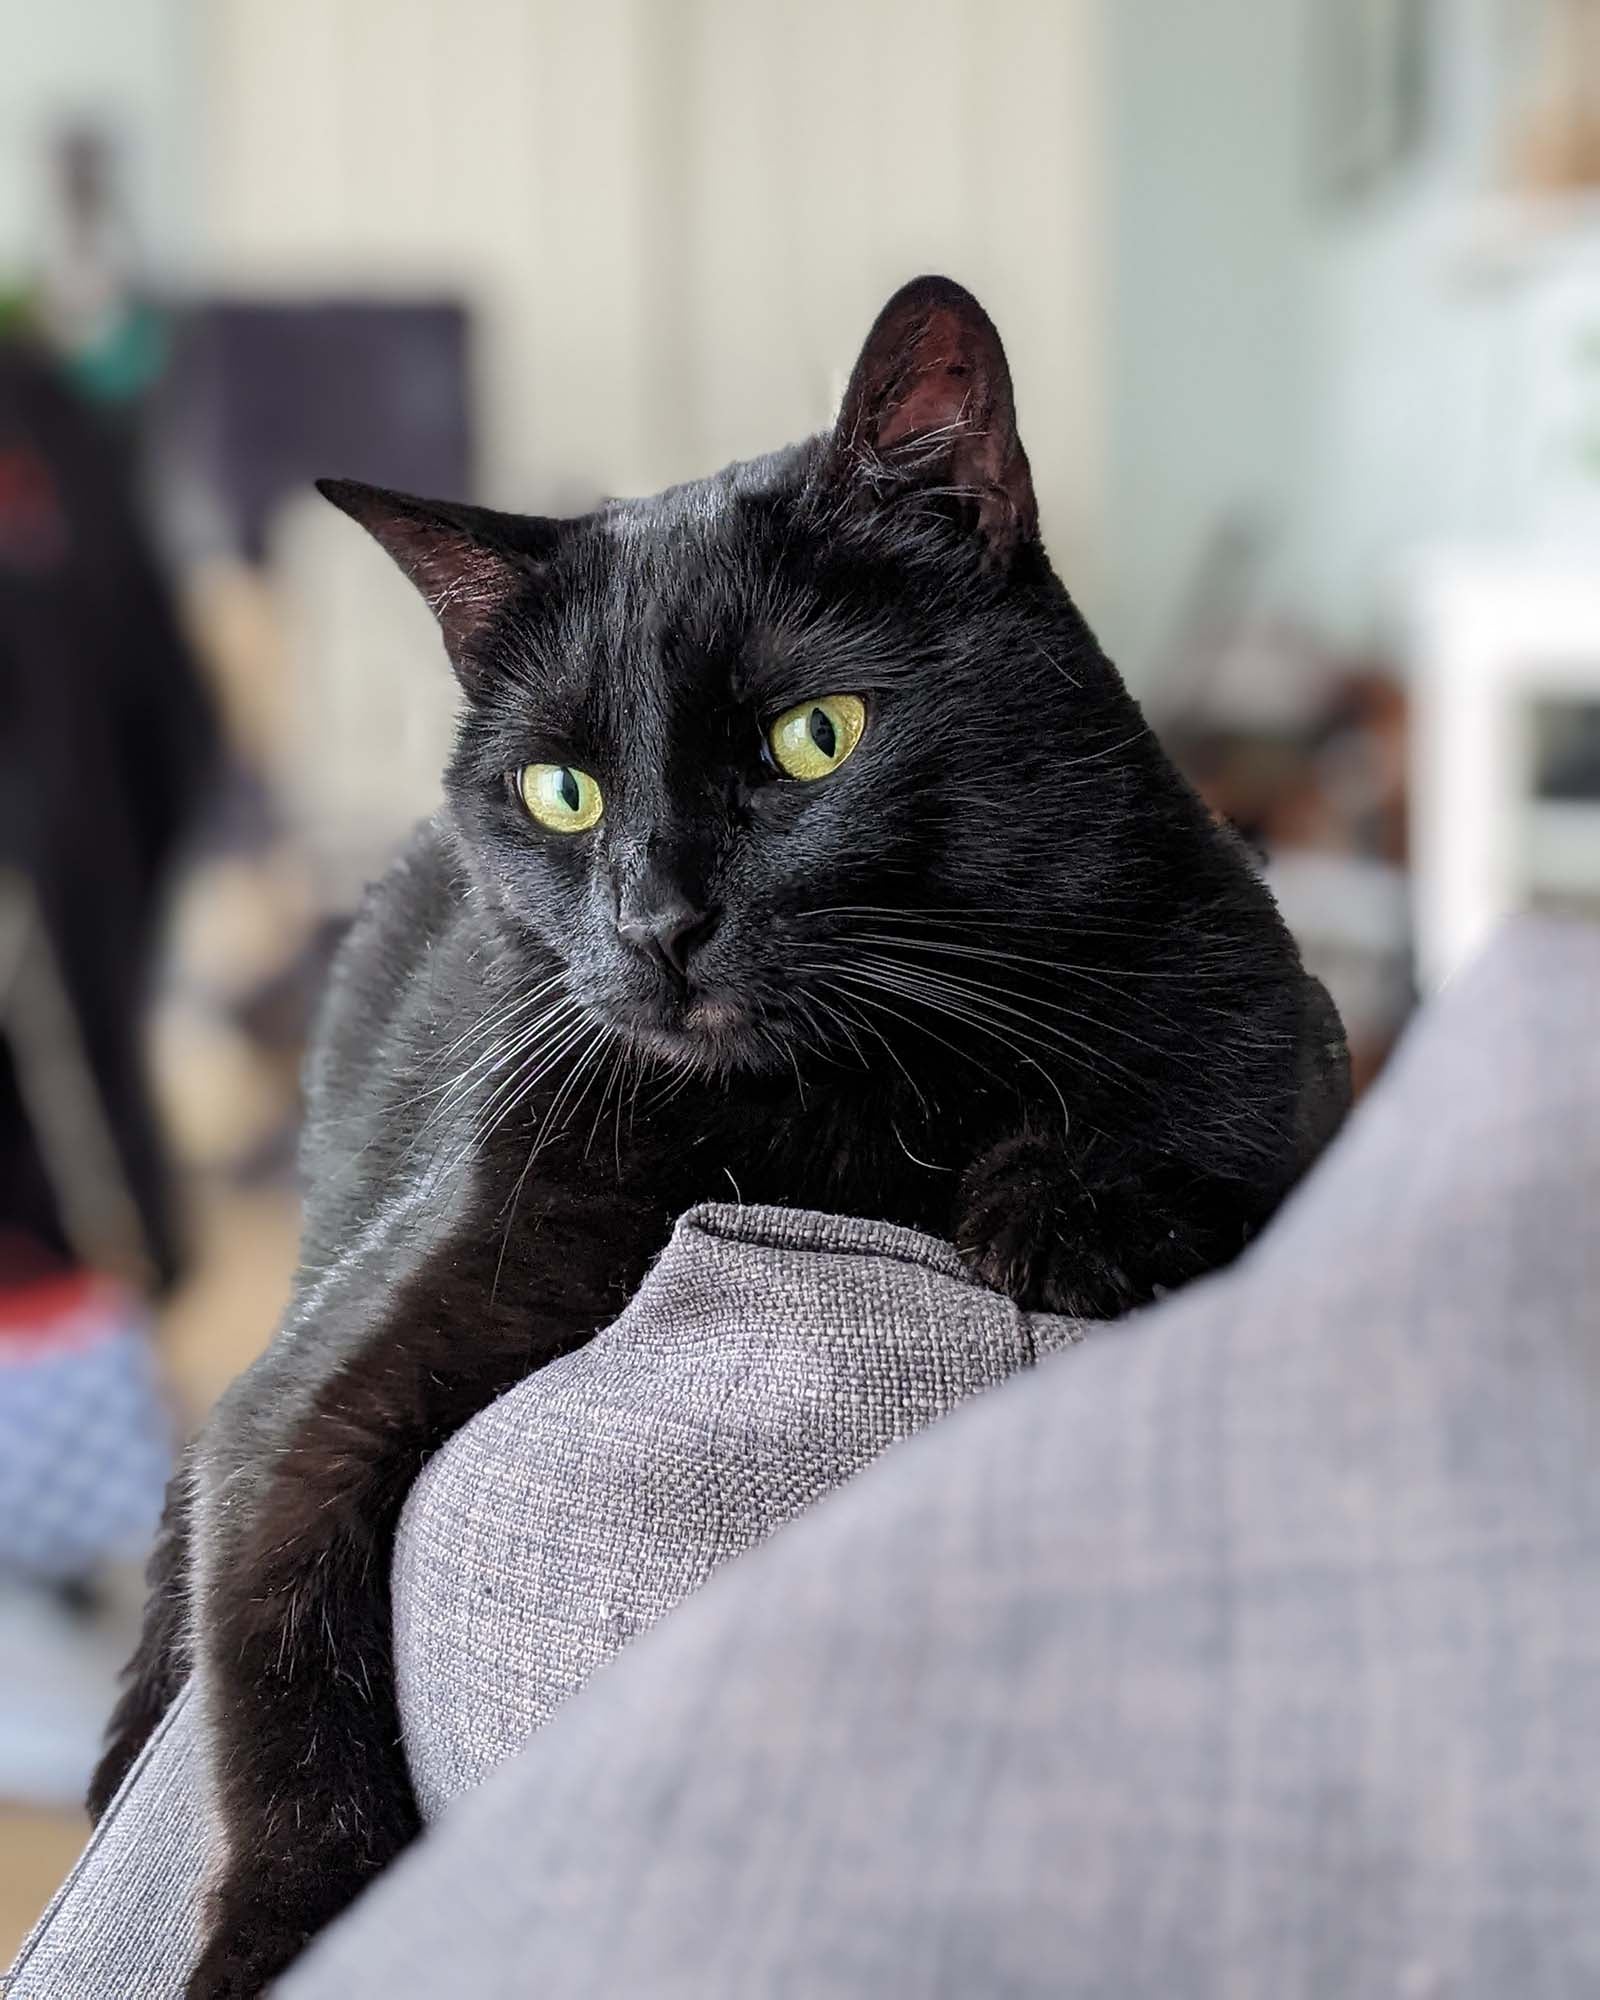 Ripley the black cat